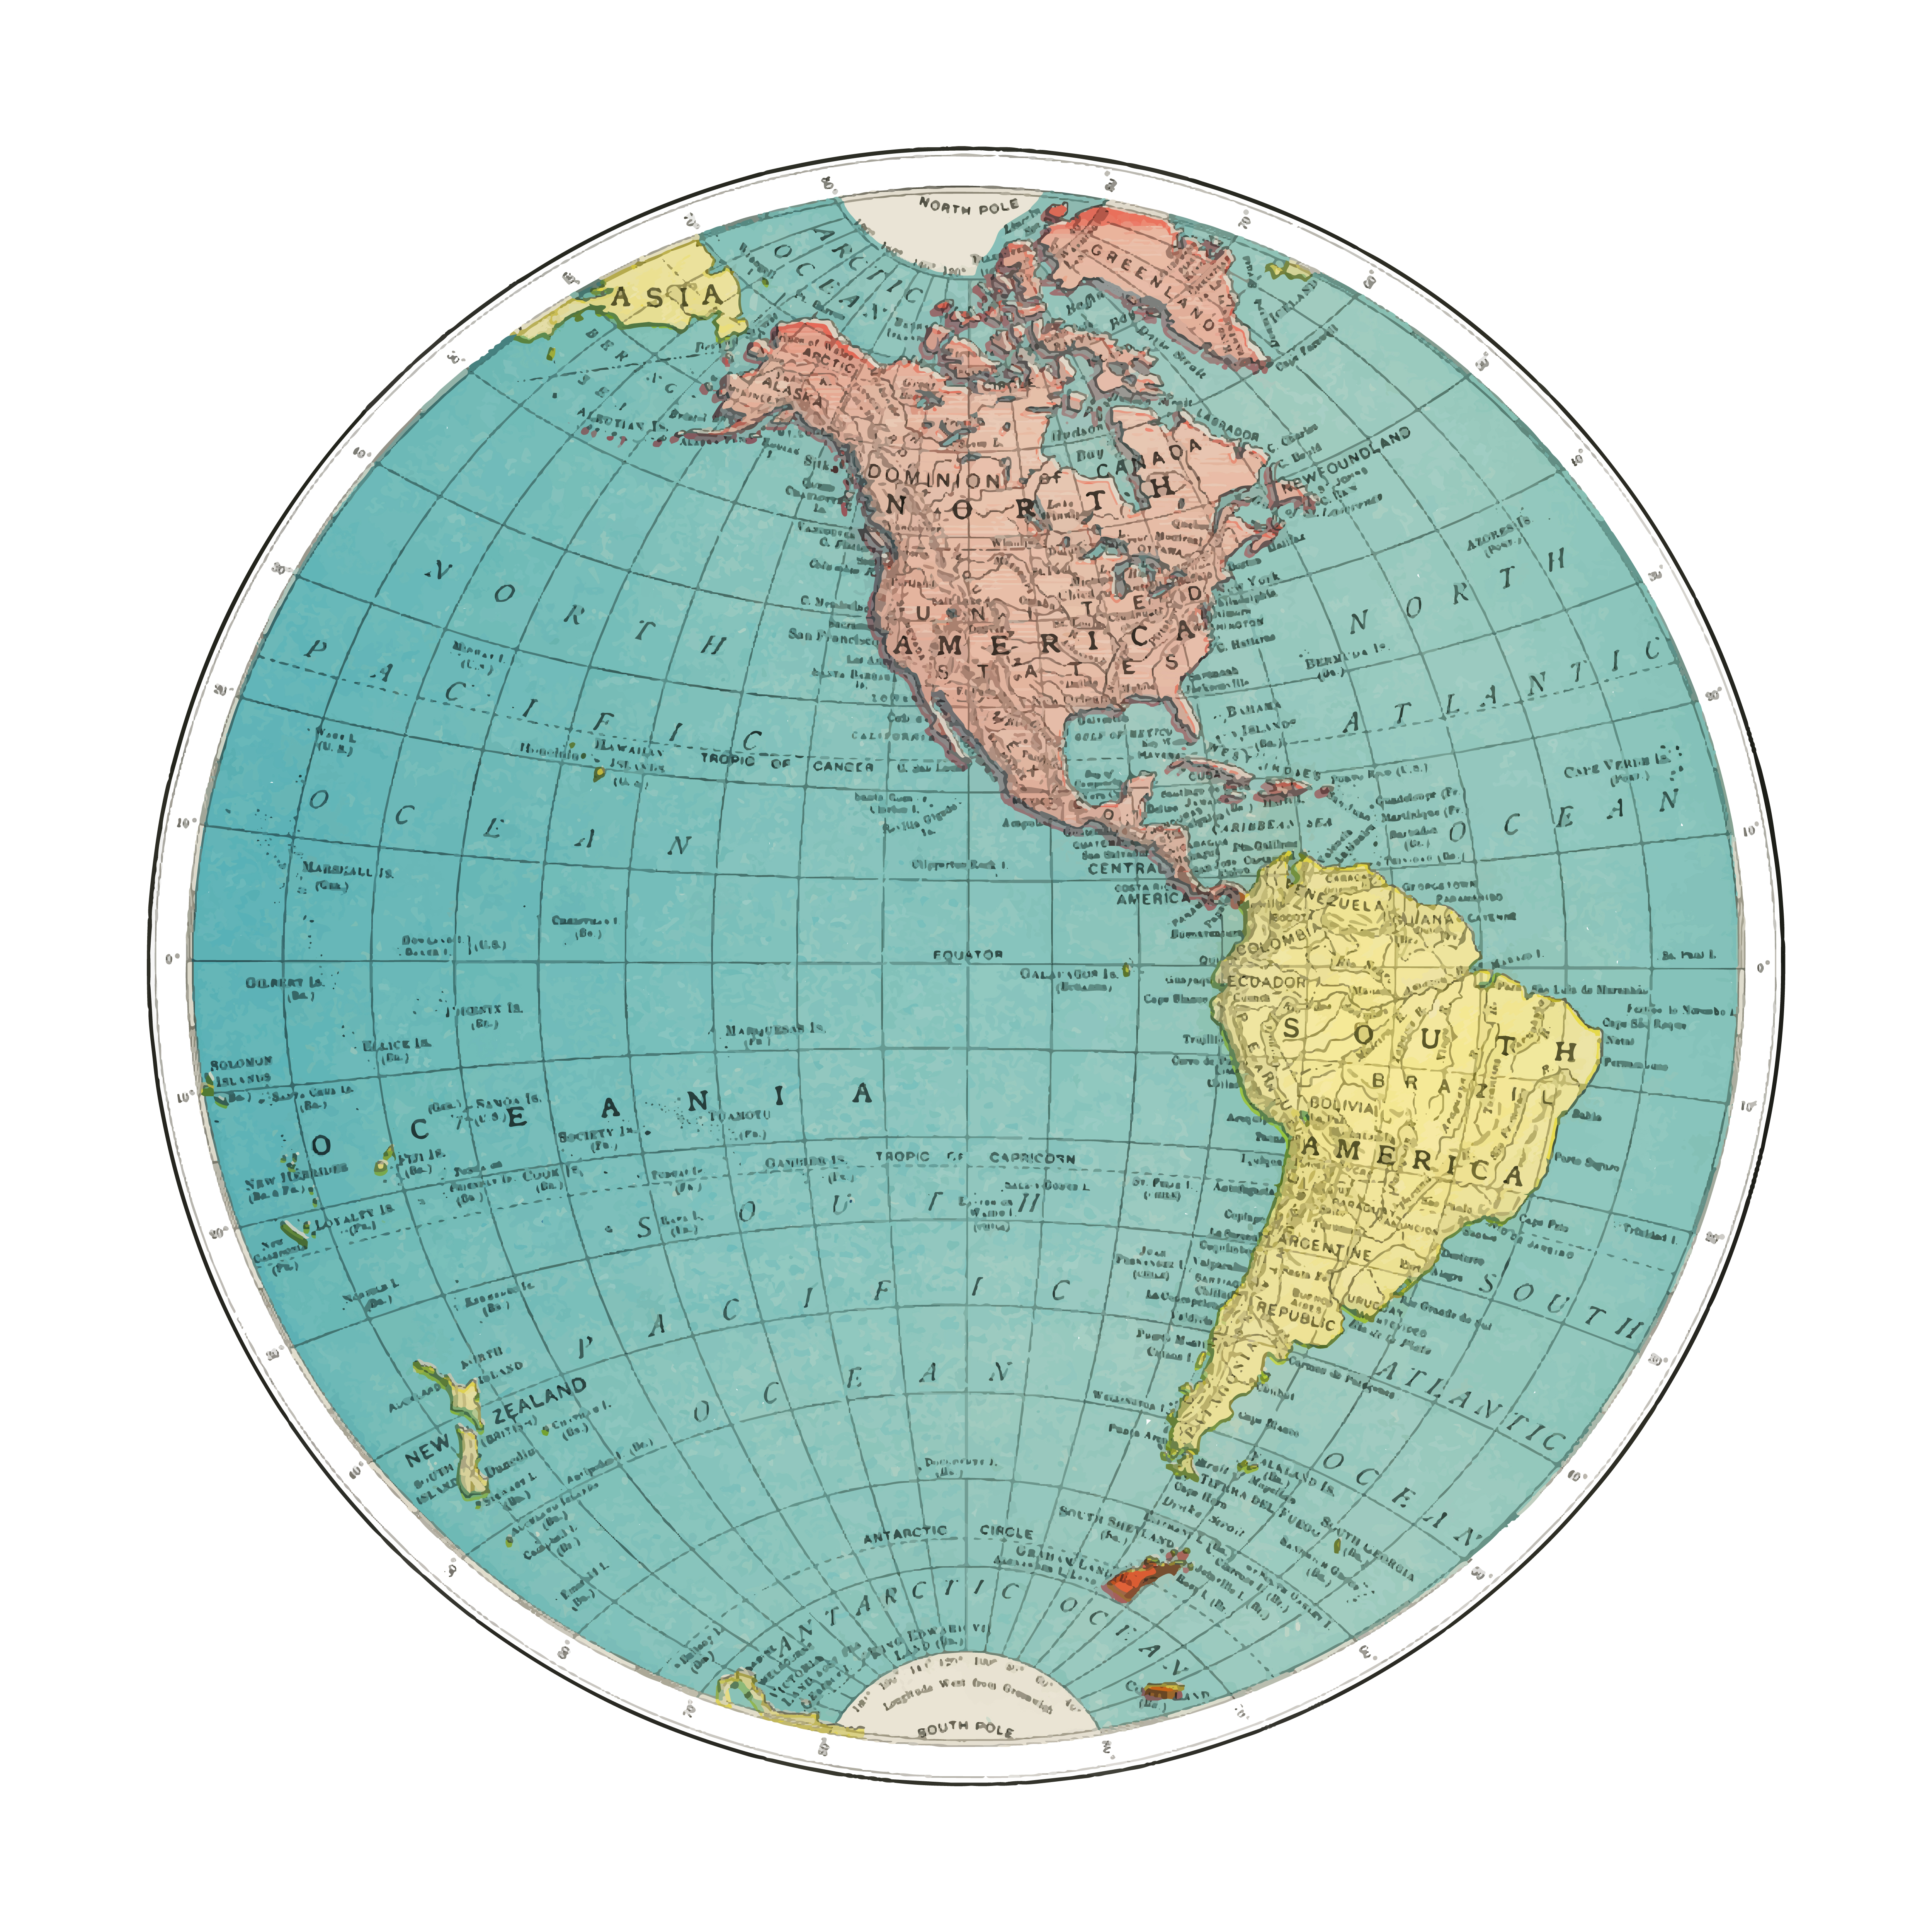 Western Hemisphere, World Atlas by Rand, McNally and Co. (1908